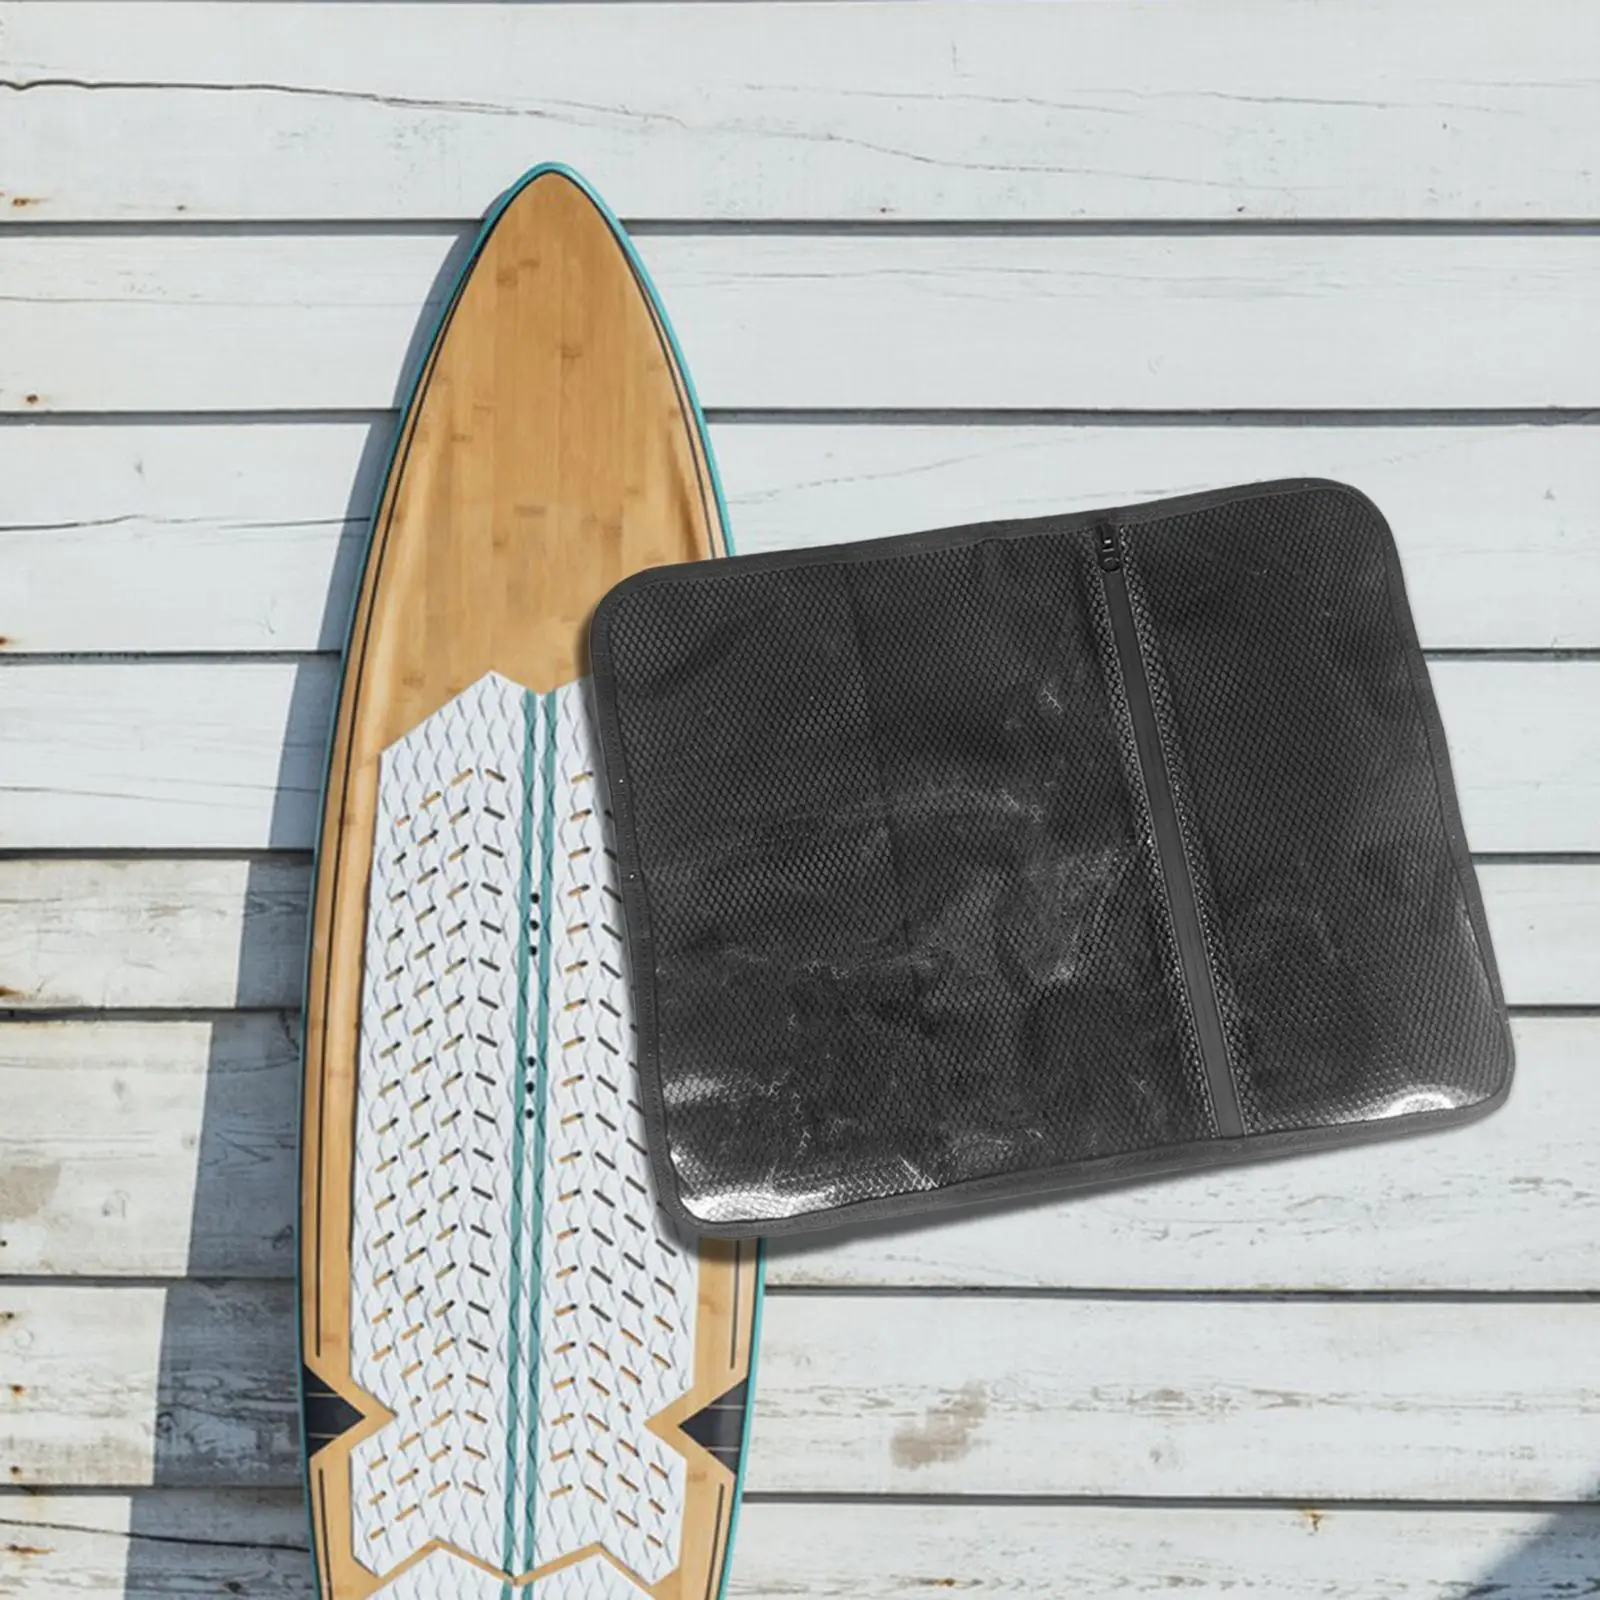 Paddle Board Deck Bag Lightweight Black Organizer Surfboard Storage Mesh Bag for Surfboard Boat Outdoor Household Water Sports